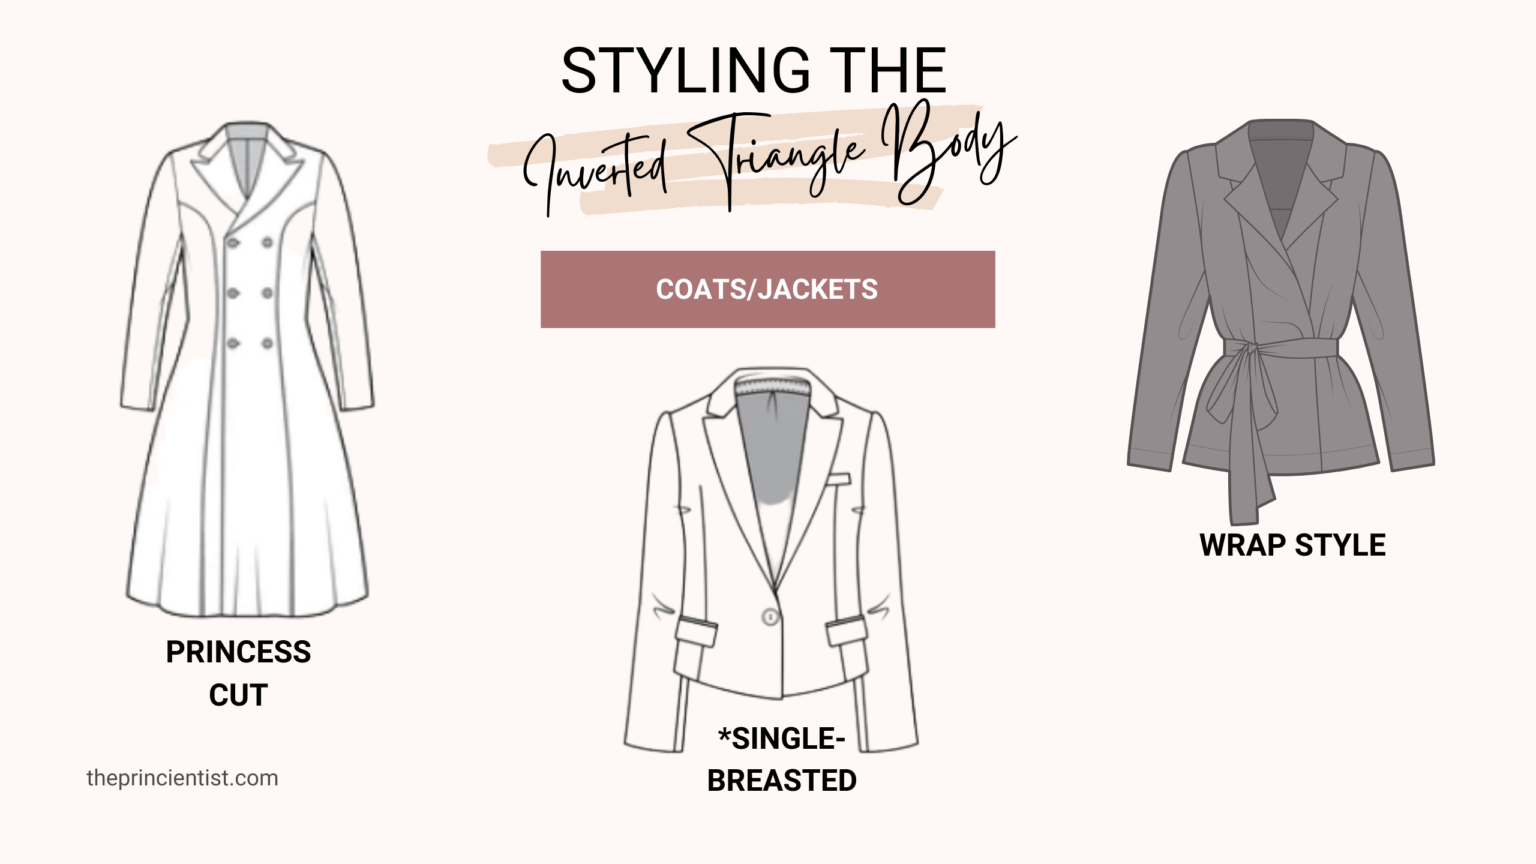 how to dress the inverted triangle body shape - coats/jackets